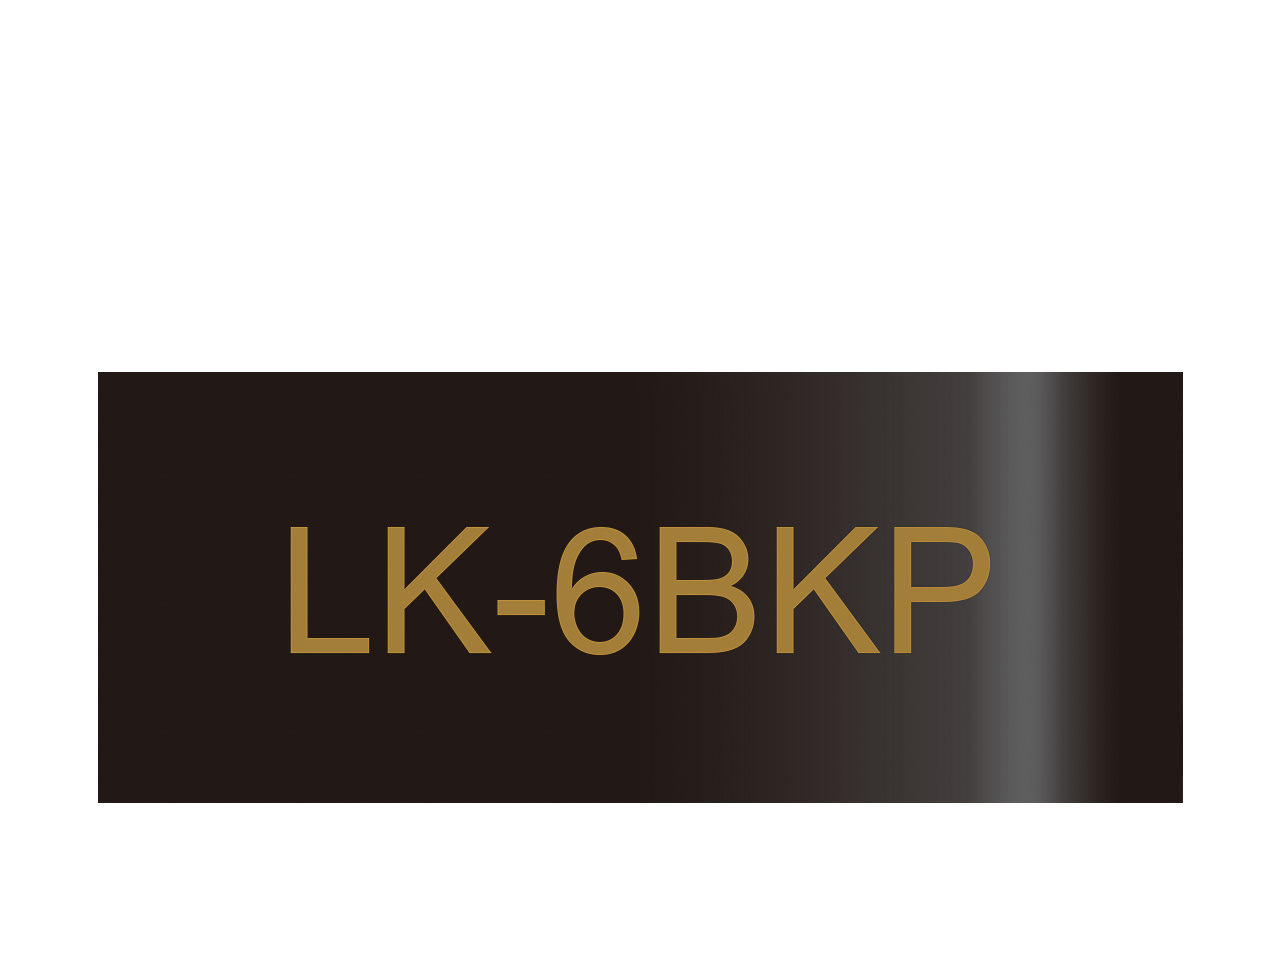 C53S672096 EPSON 24mm BLACK GOLD LK-6BKP tape metallic 9m 1